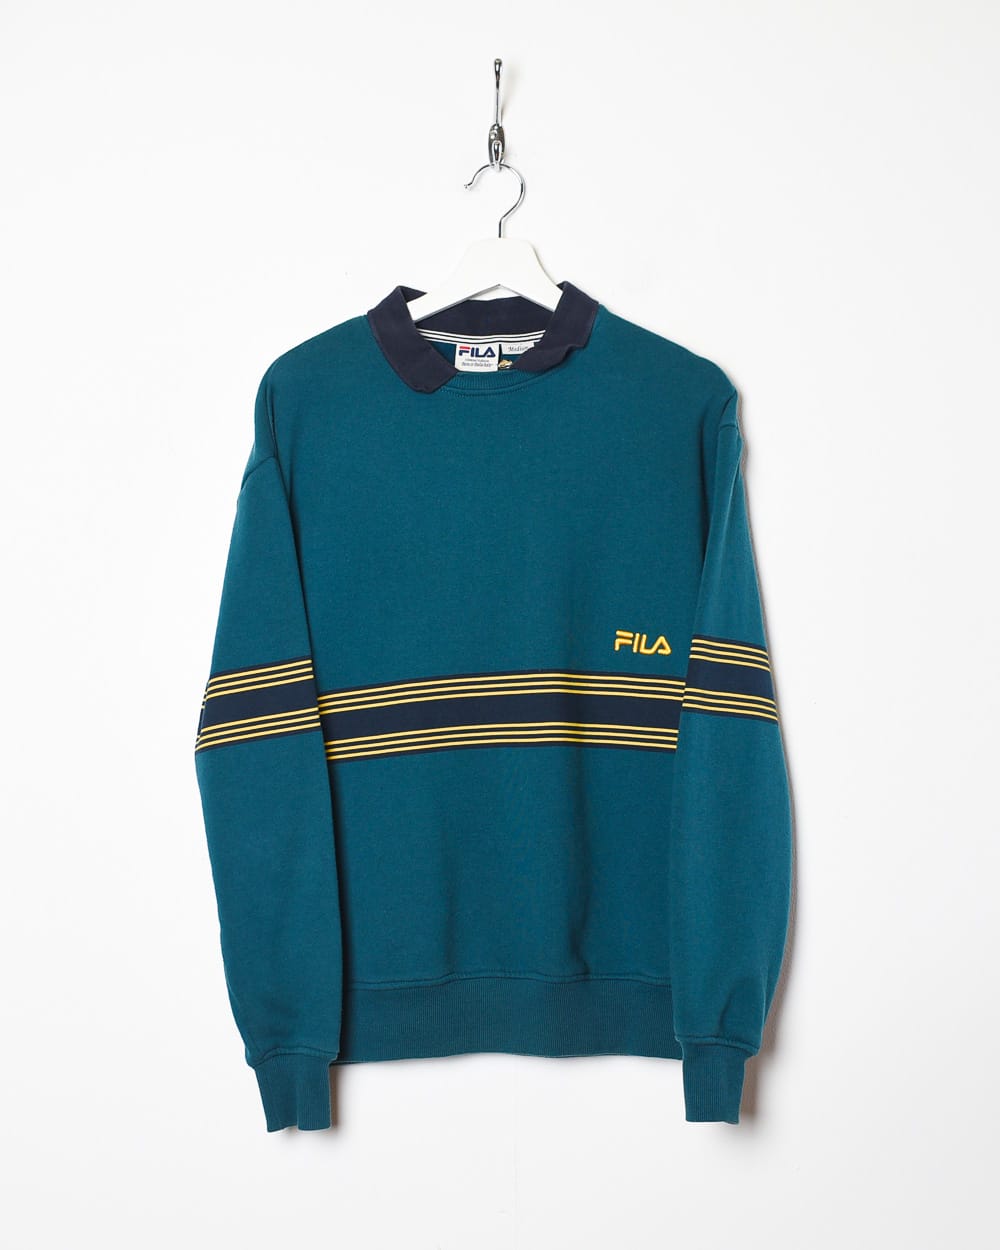 Green Fila Collared Sweatshirt - Small